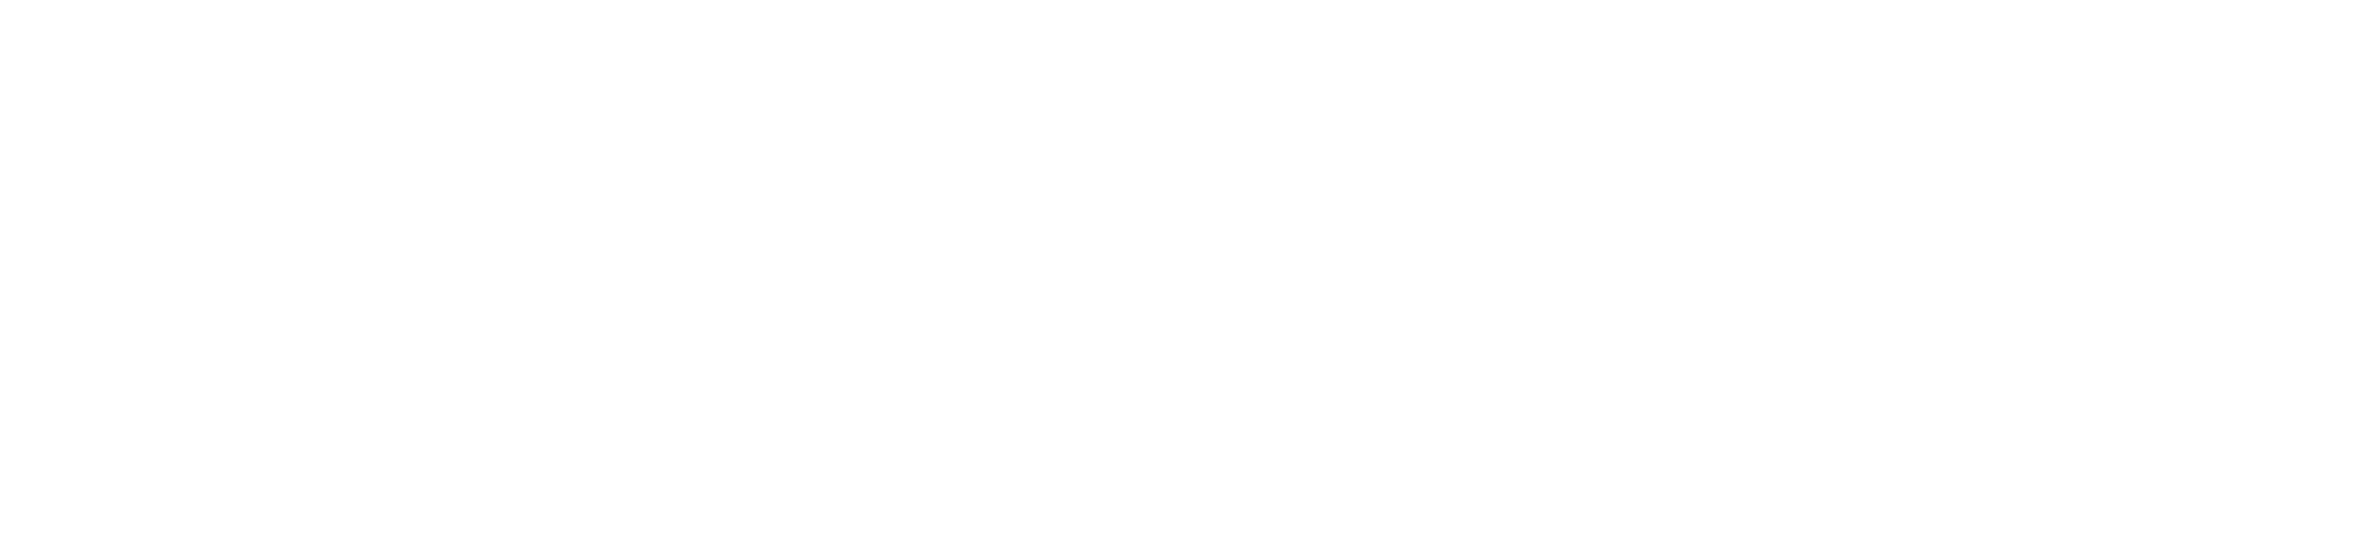  Max-Planck-Institute for Human Development